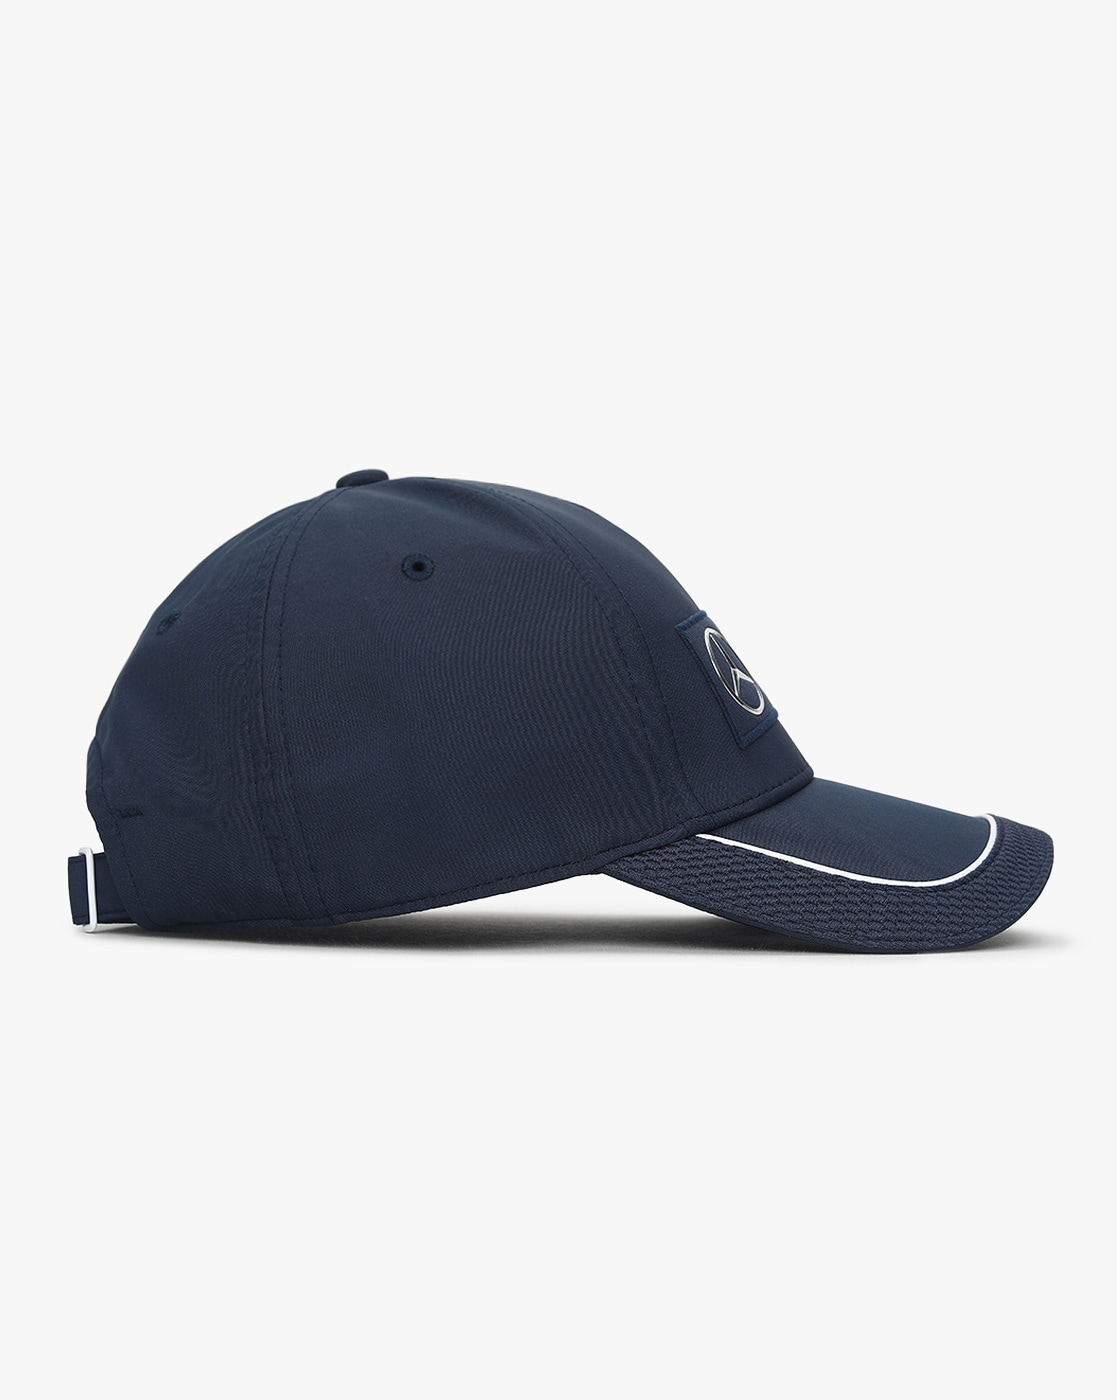 Sireck Sun Hat For Men Women, Upf 50 Fishing Hat, Outdoor Sun